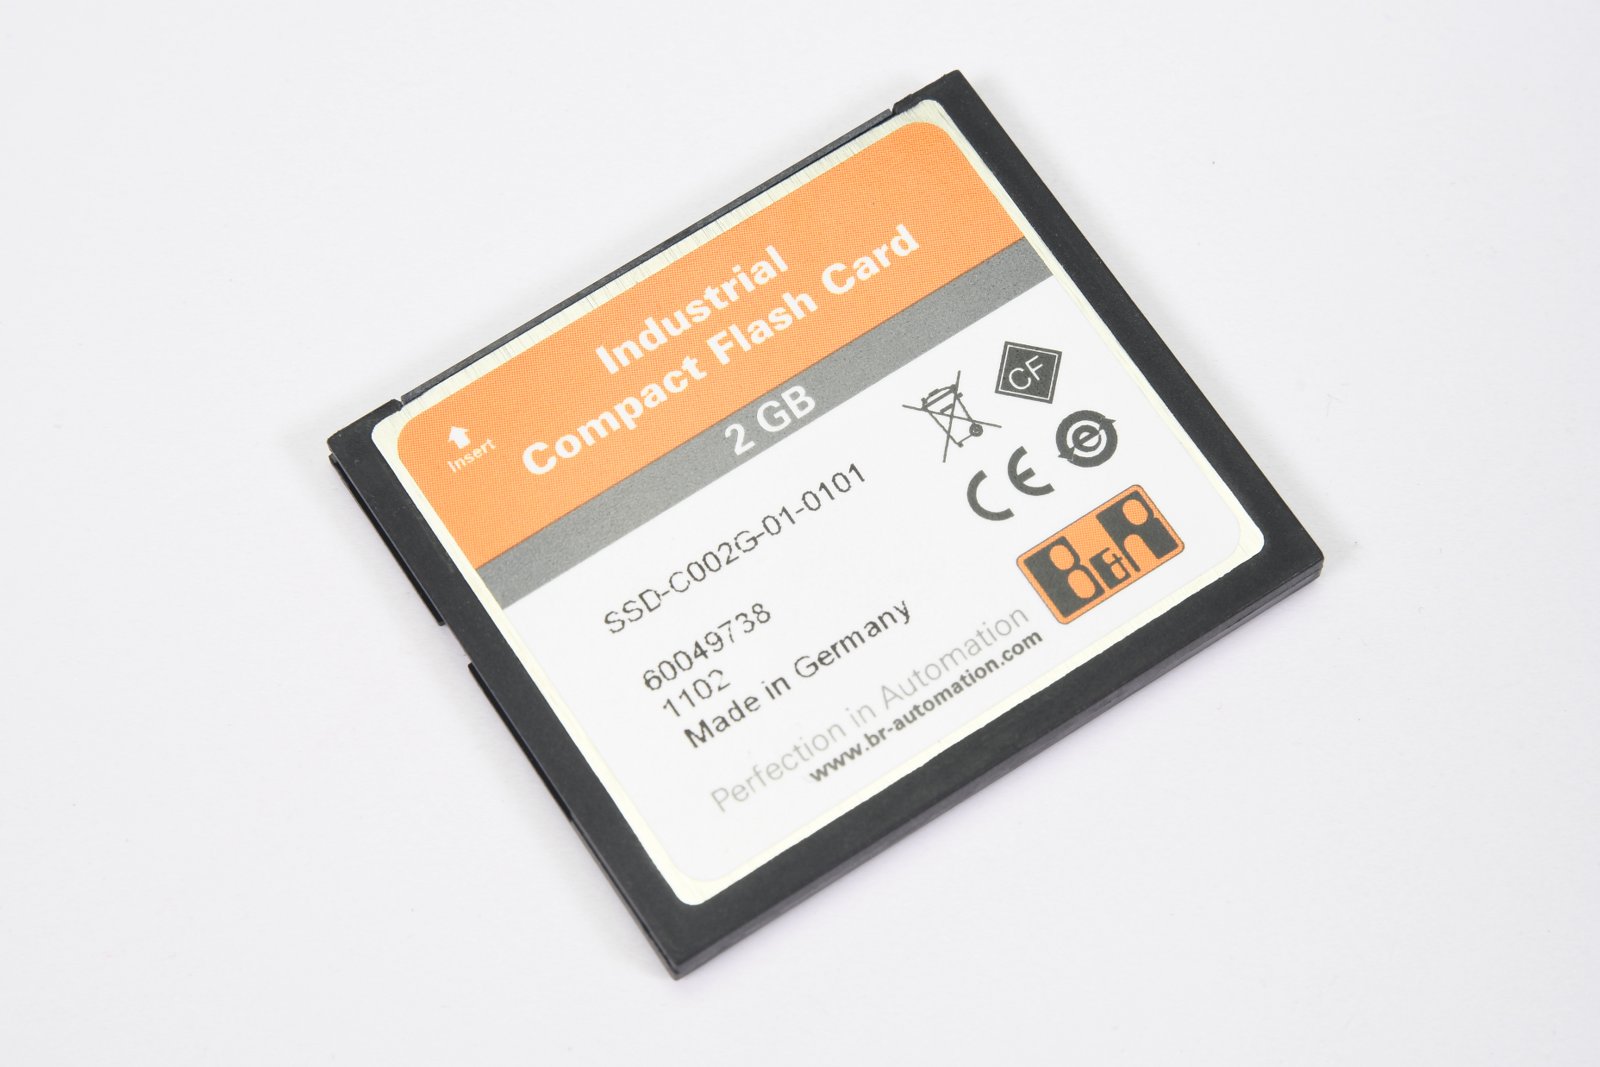 B&R SSD-C002G-01-0101, Compact flash card 2GB, C0